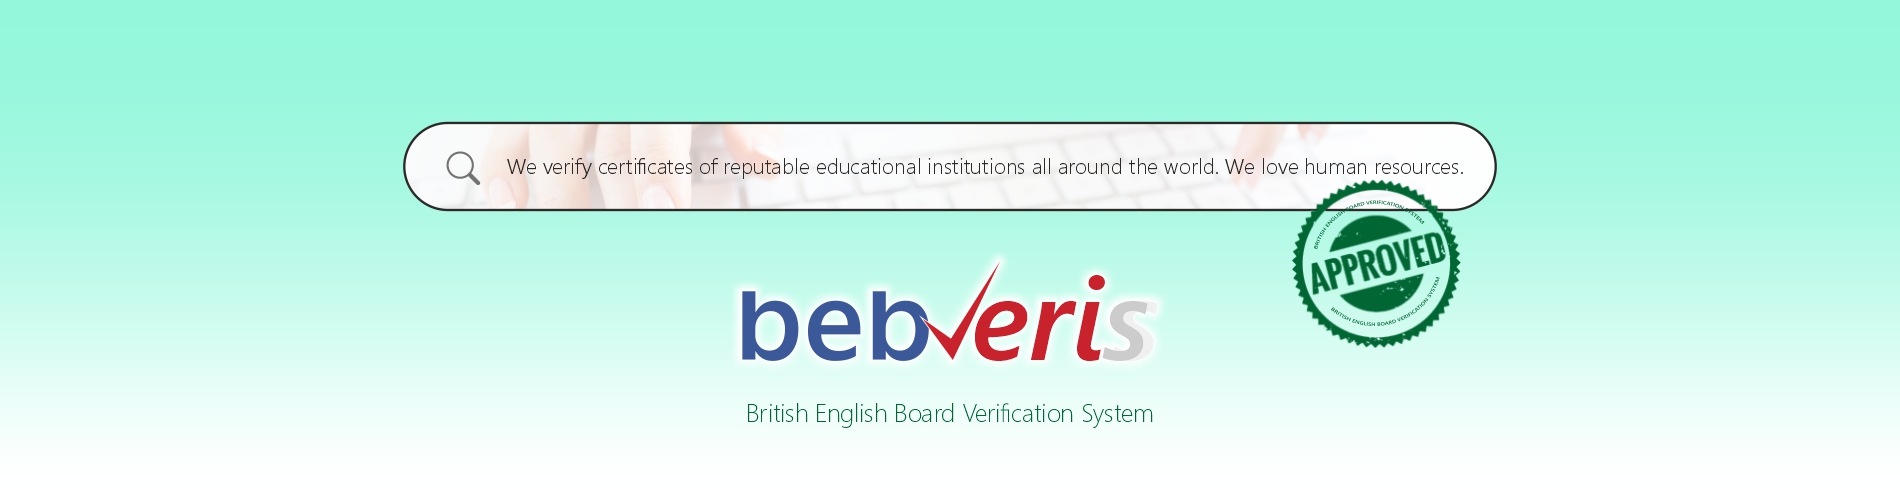 British English Board Verification System - BEBVERIS